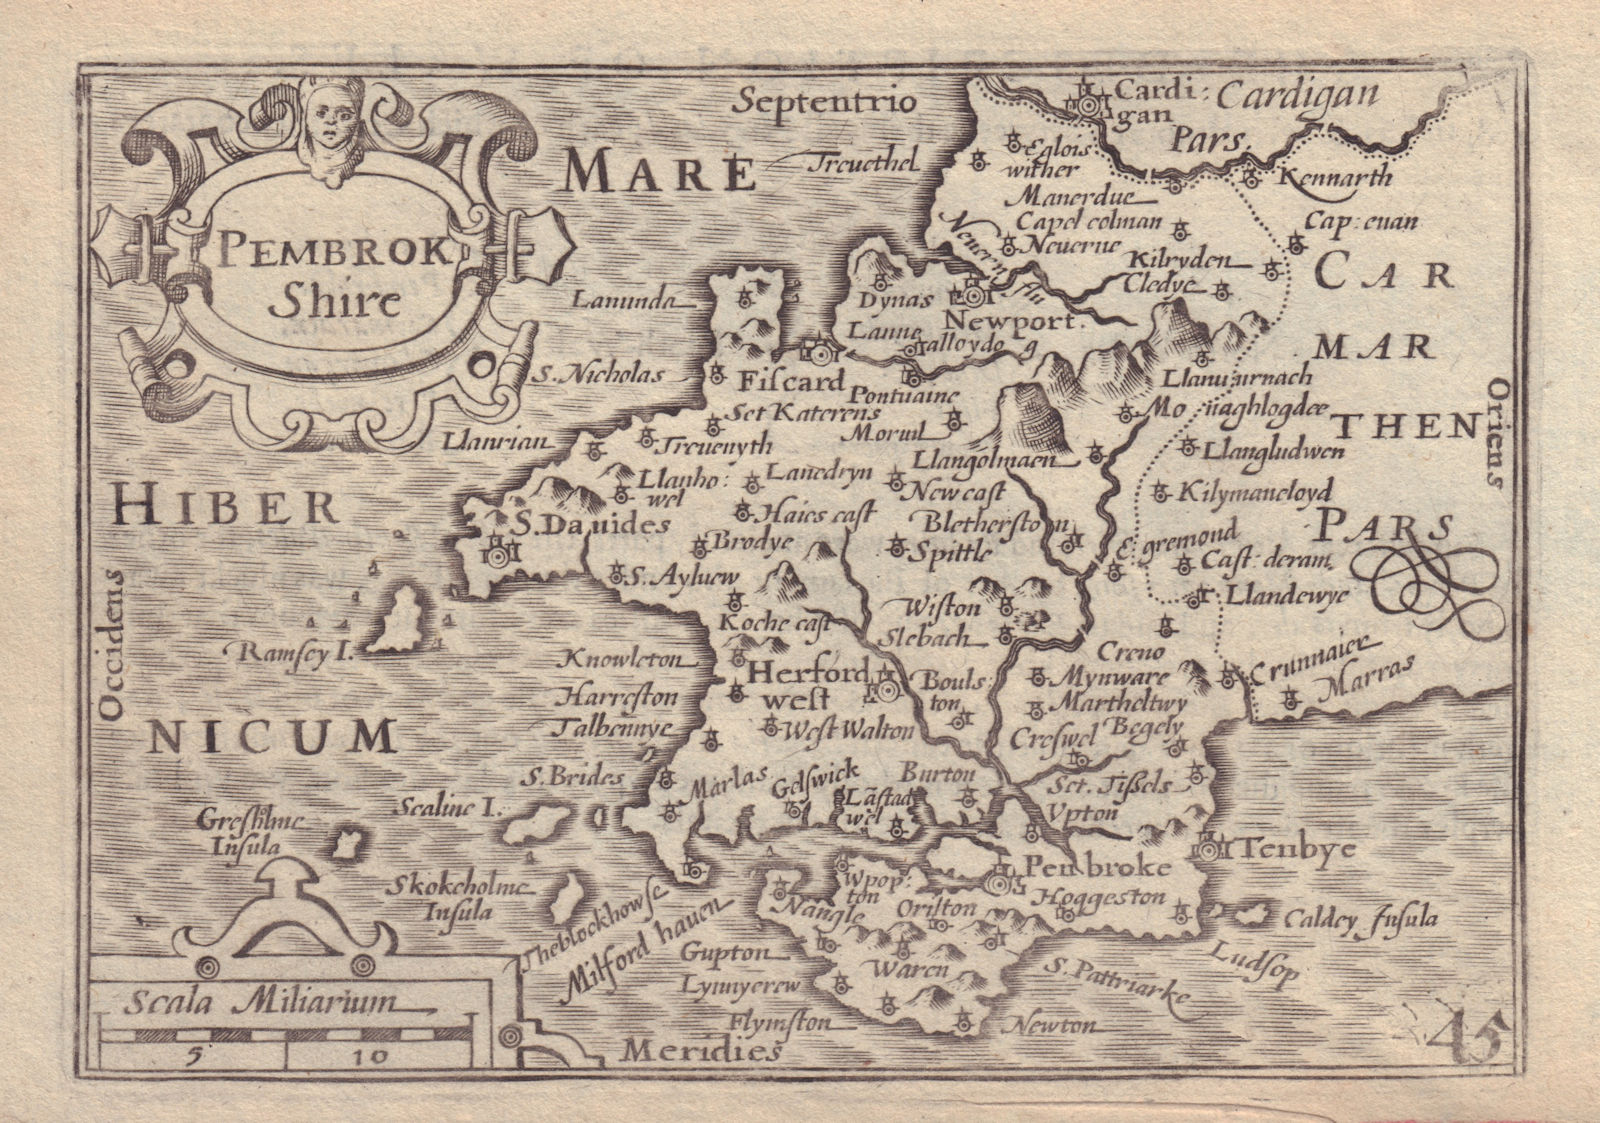 Pembrok Shire by van den Keere. "Speed miniature" Pembrokeshire county map 1632